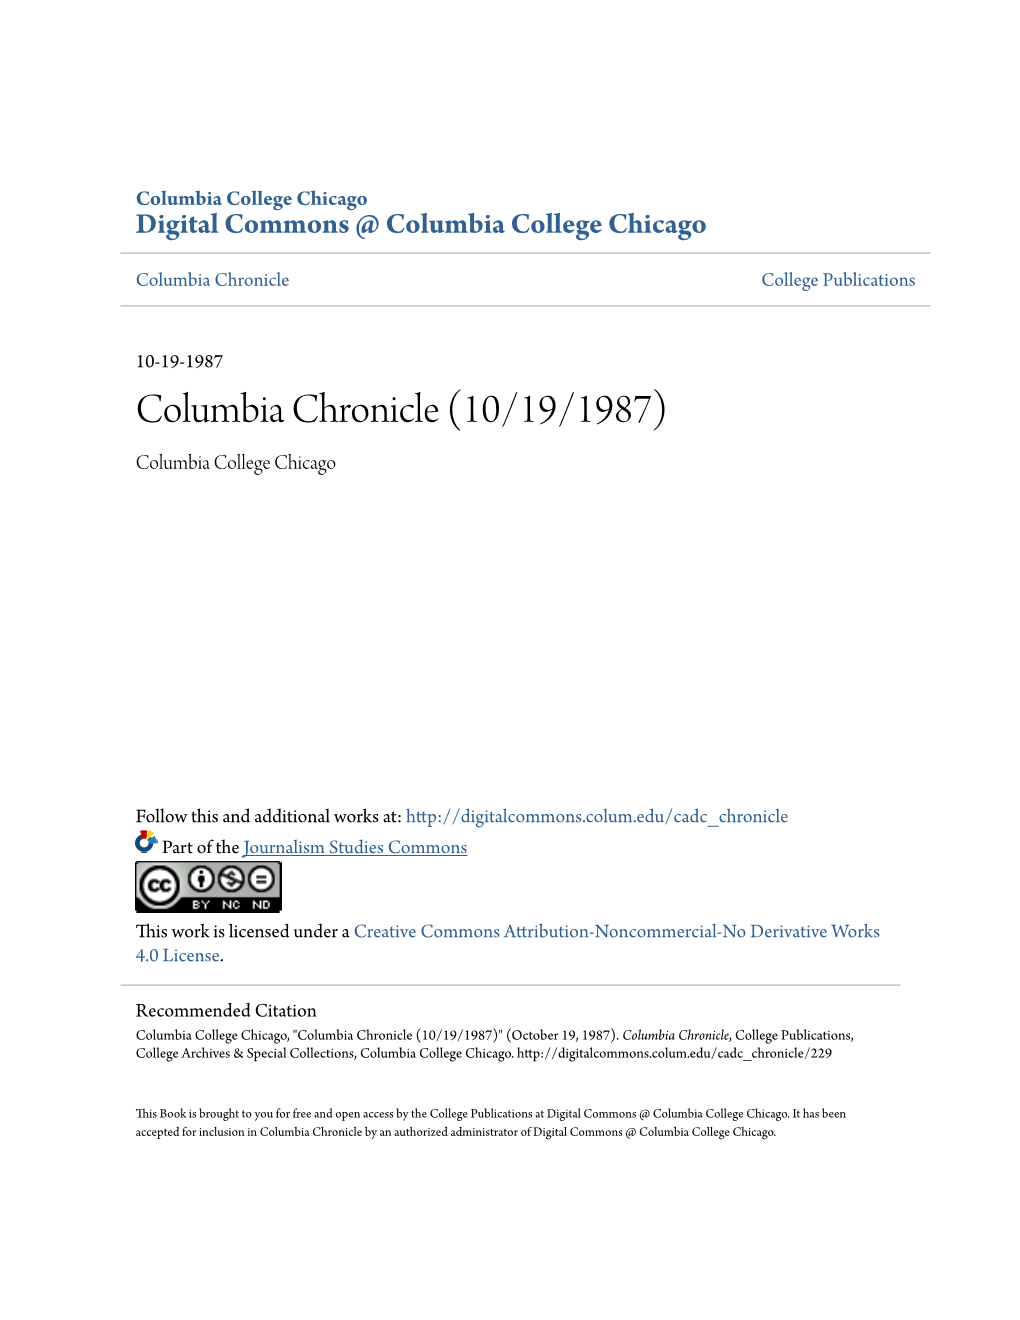 Columbia Chronicle (10/19/1987) Columbia College Chicago